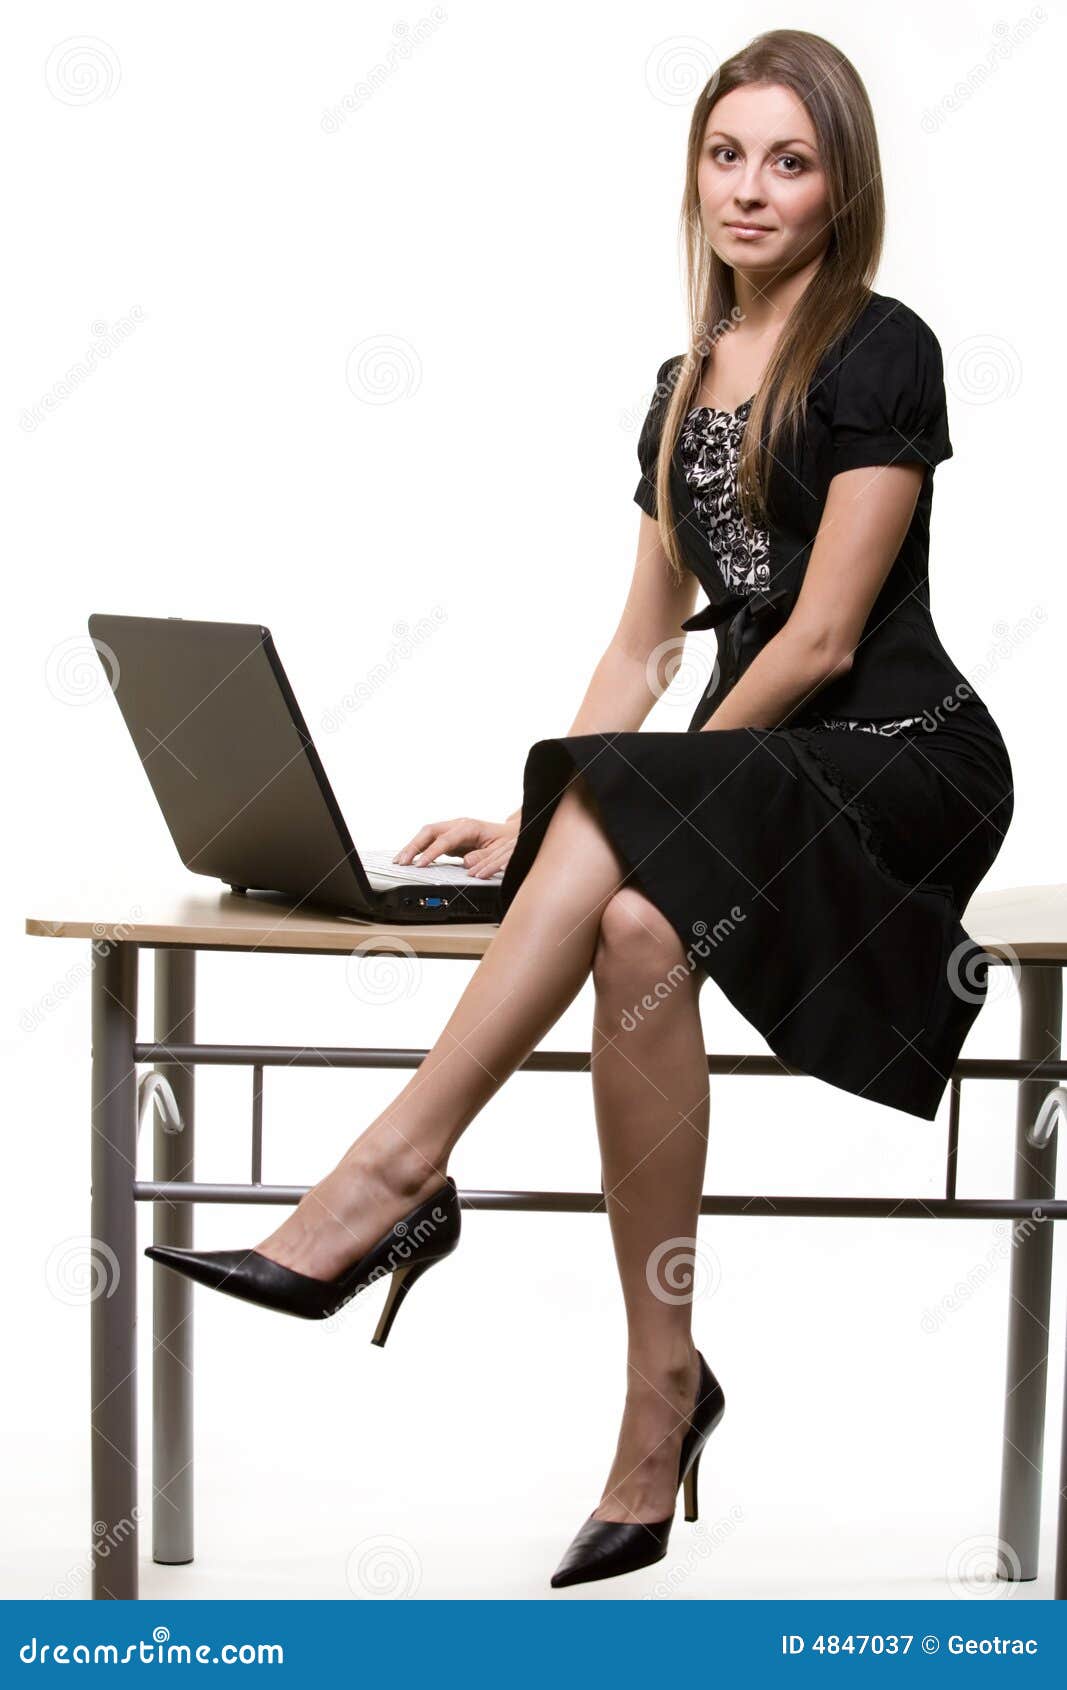 https://thumbs.dreamstime.com/z/woman-sitting-desk-4847037.jpg